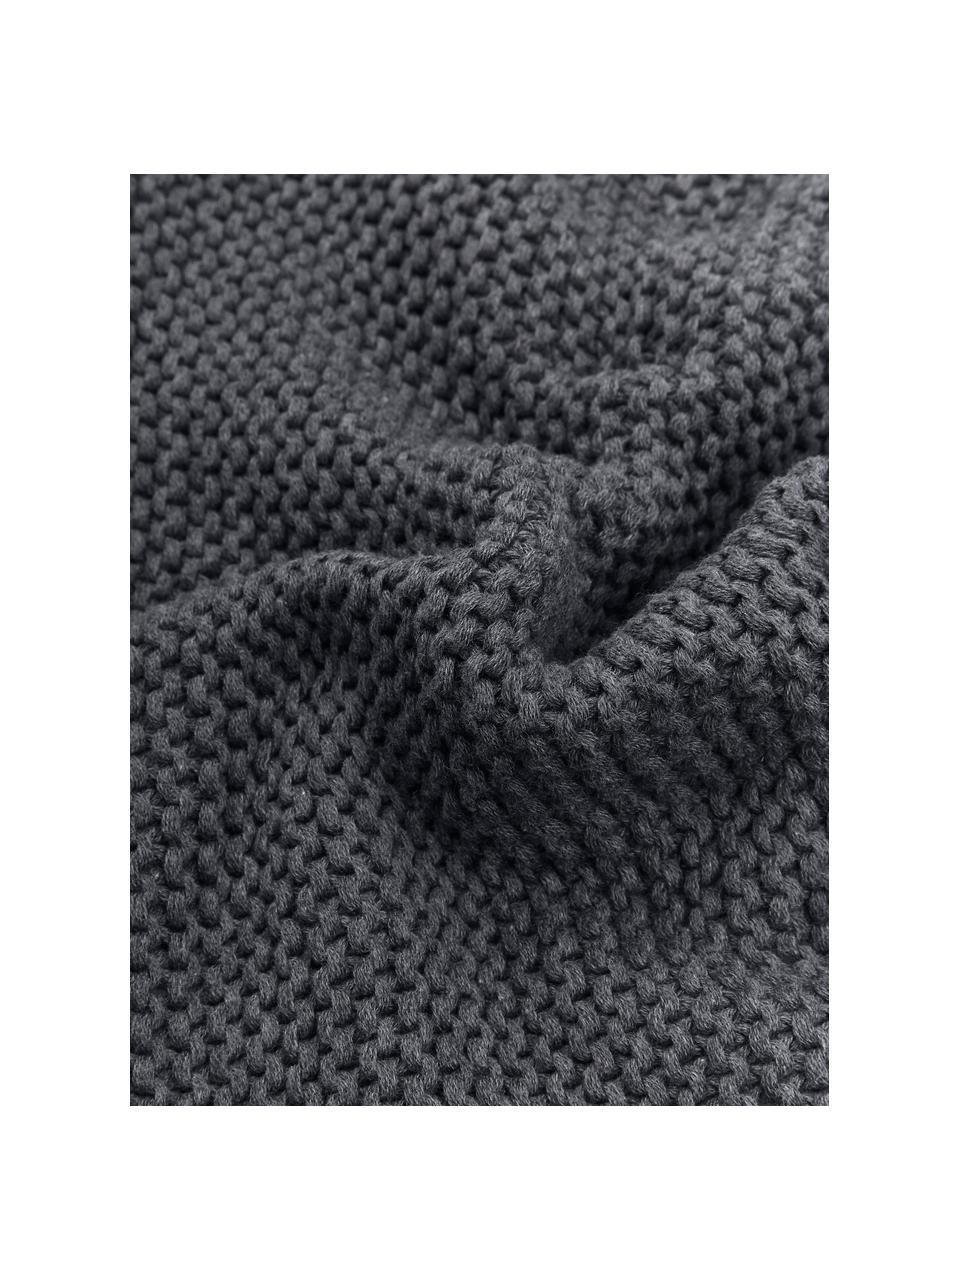 Strick-Kissenhülle Adalyn aus Bio-Baumwolle in Dunkelgrau, 100% Bio-Baumwolle, GOTS-zertifiziert, Dunkelgrau, B 40 x L 40 cm